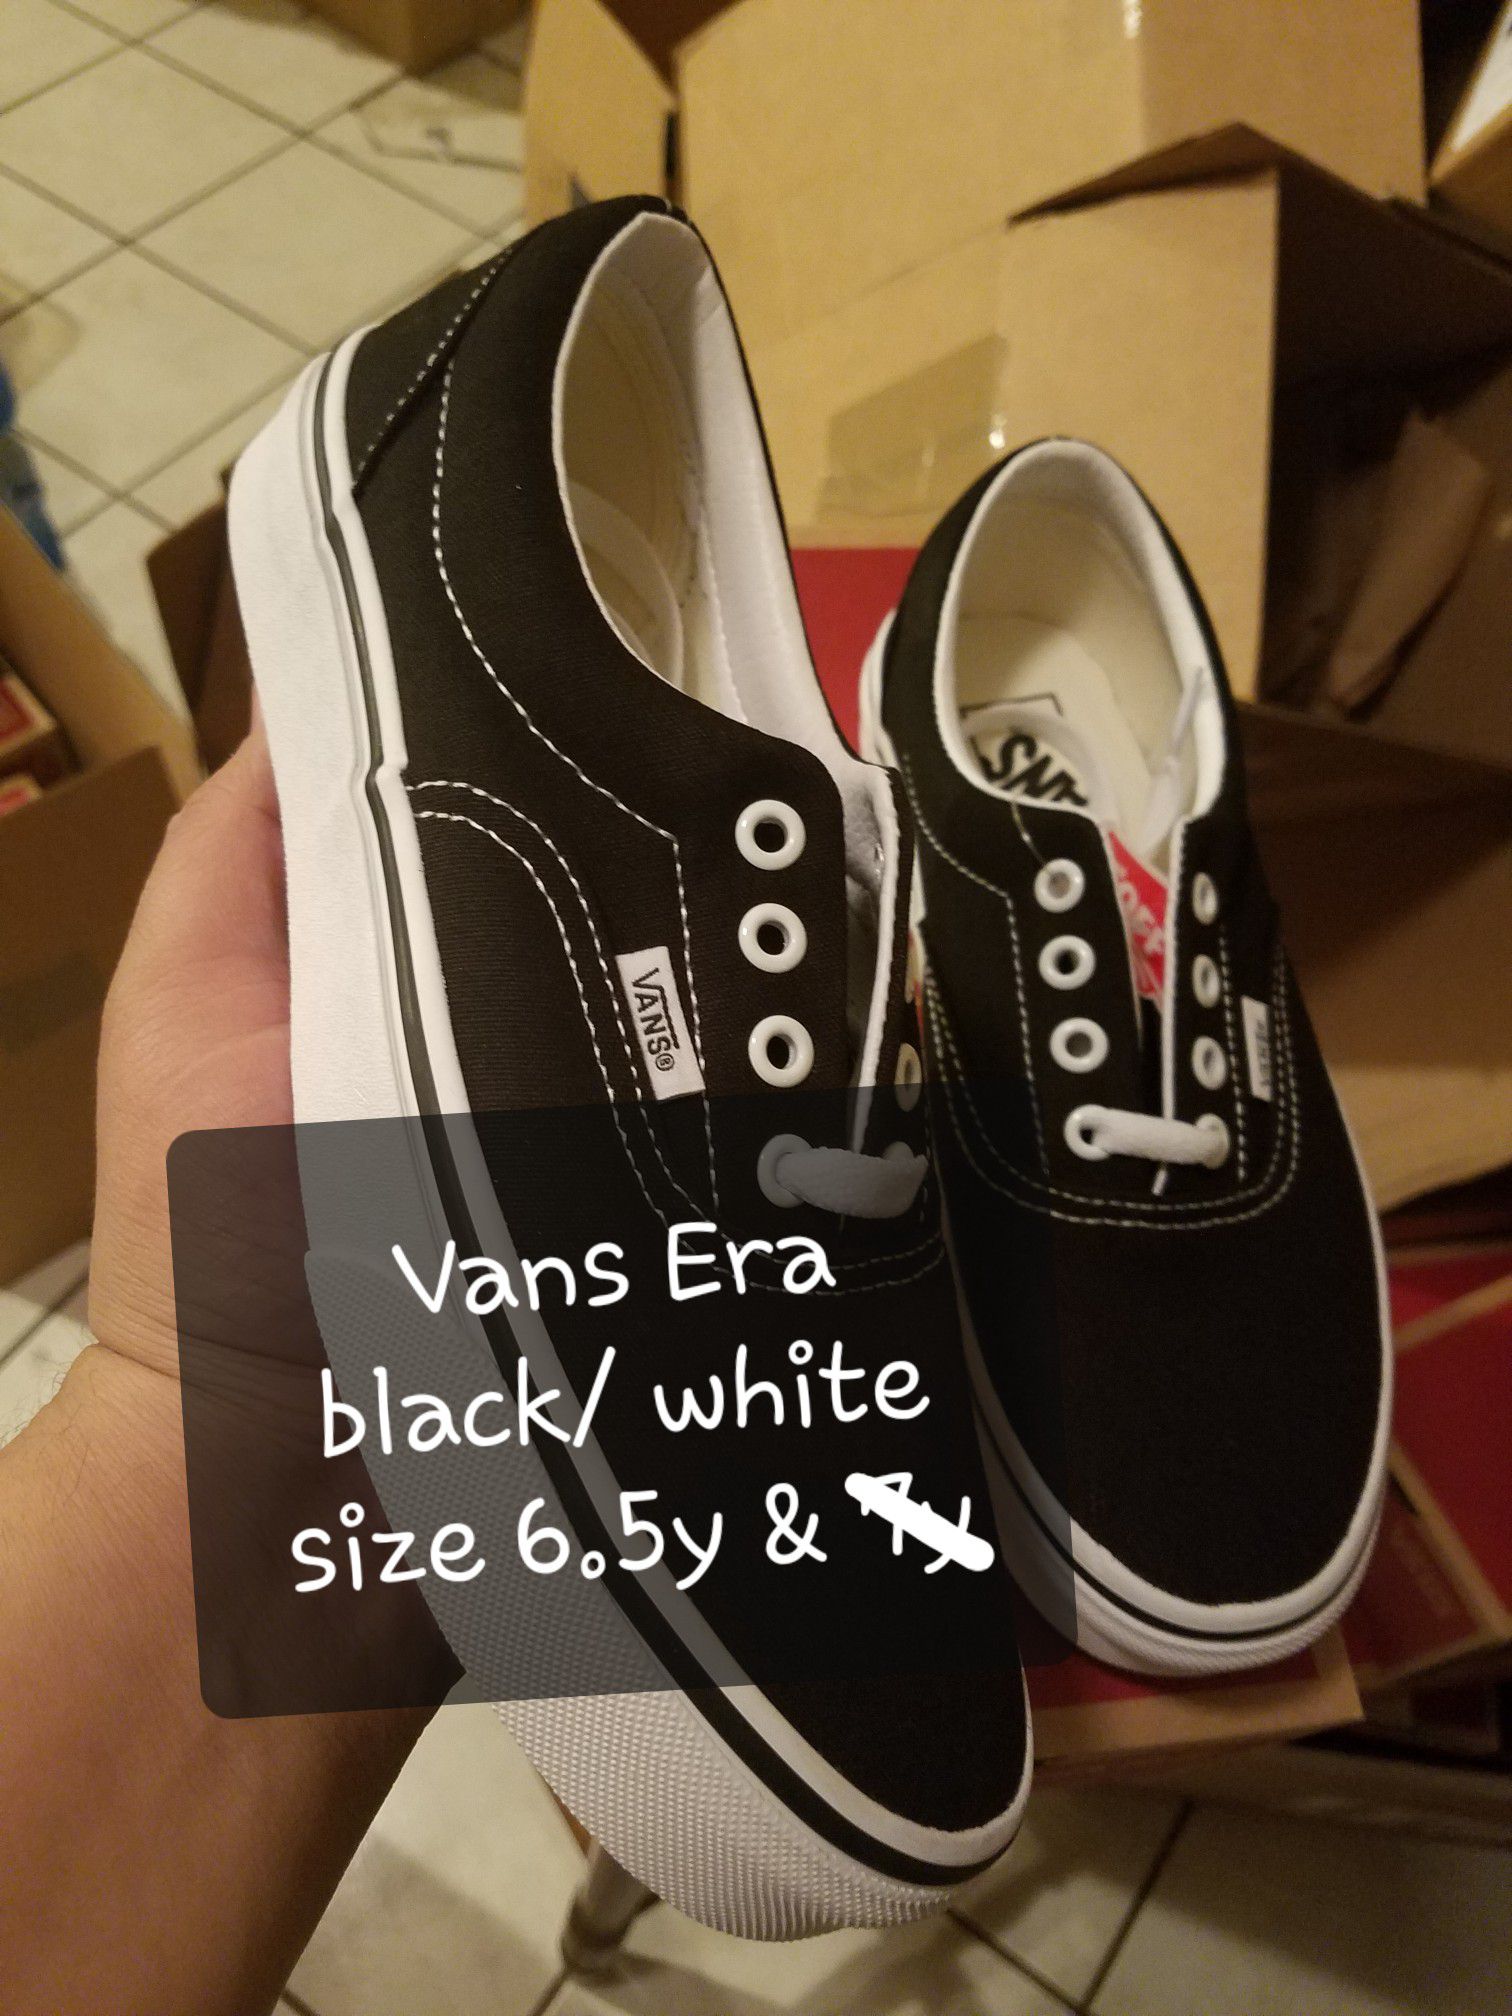 Vans Era black white size 6.5y new